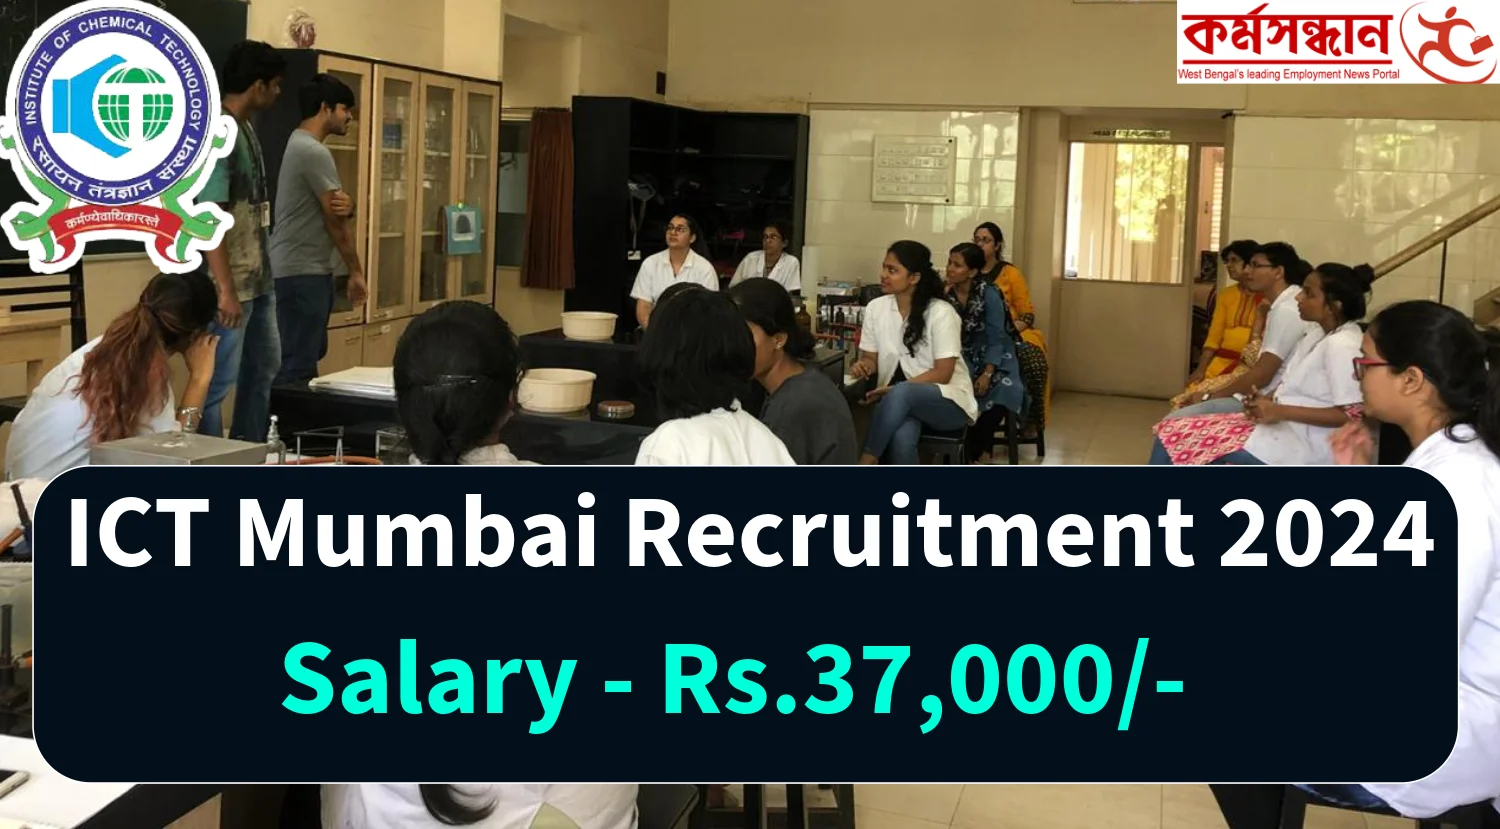 ICT Mumbai Recruitment 2024 Notification out